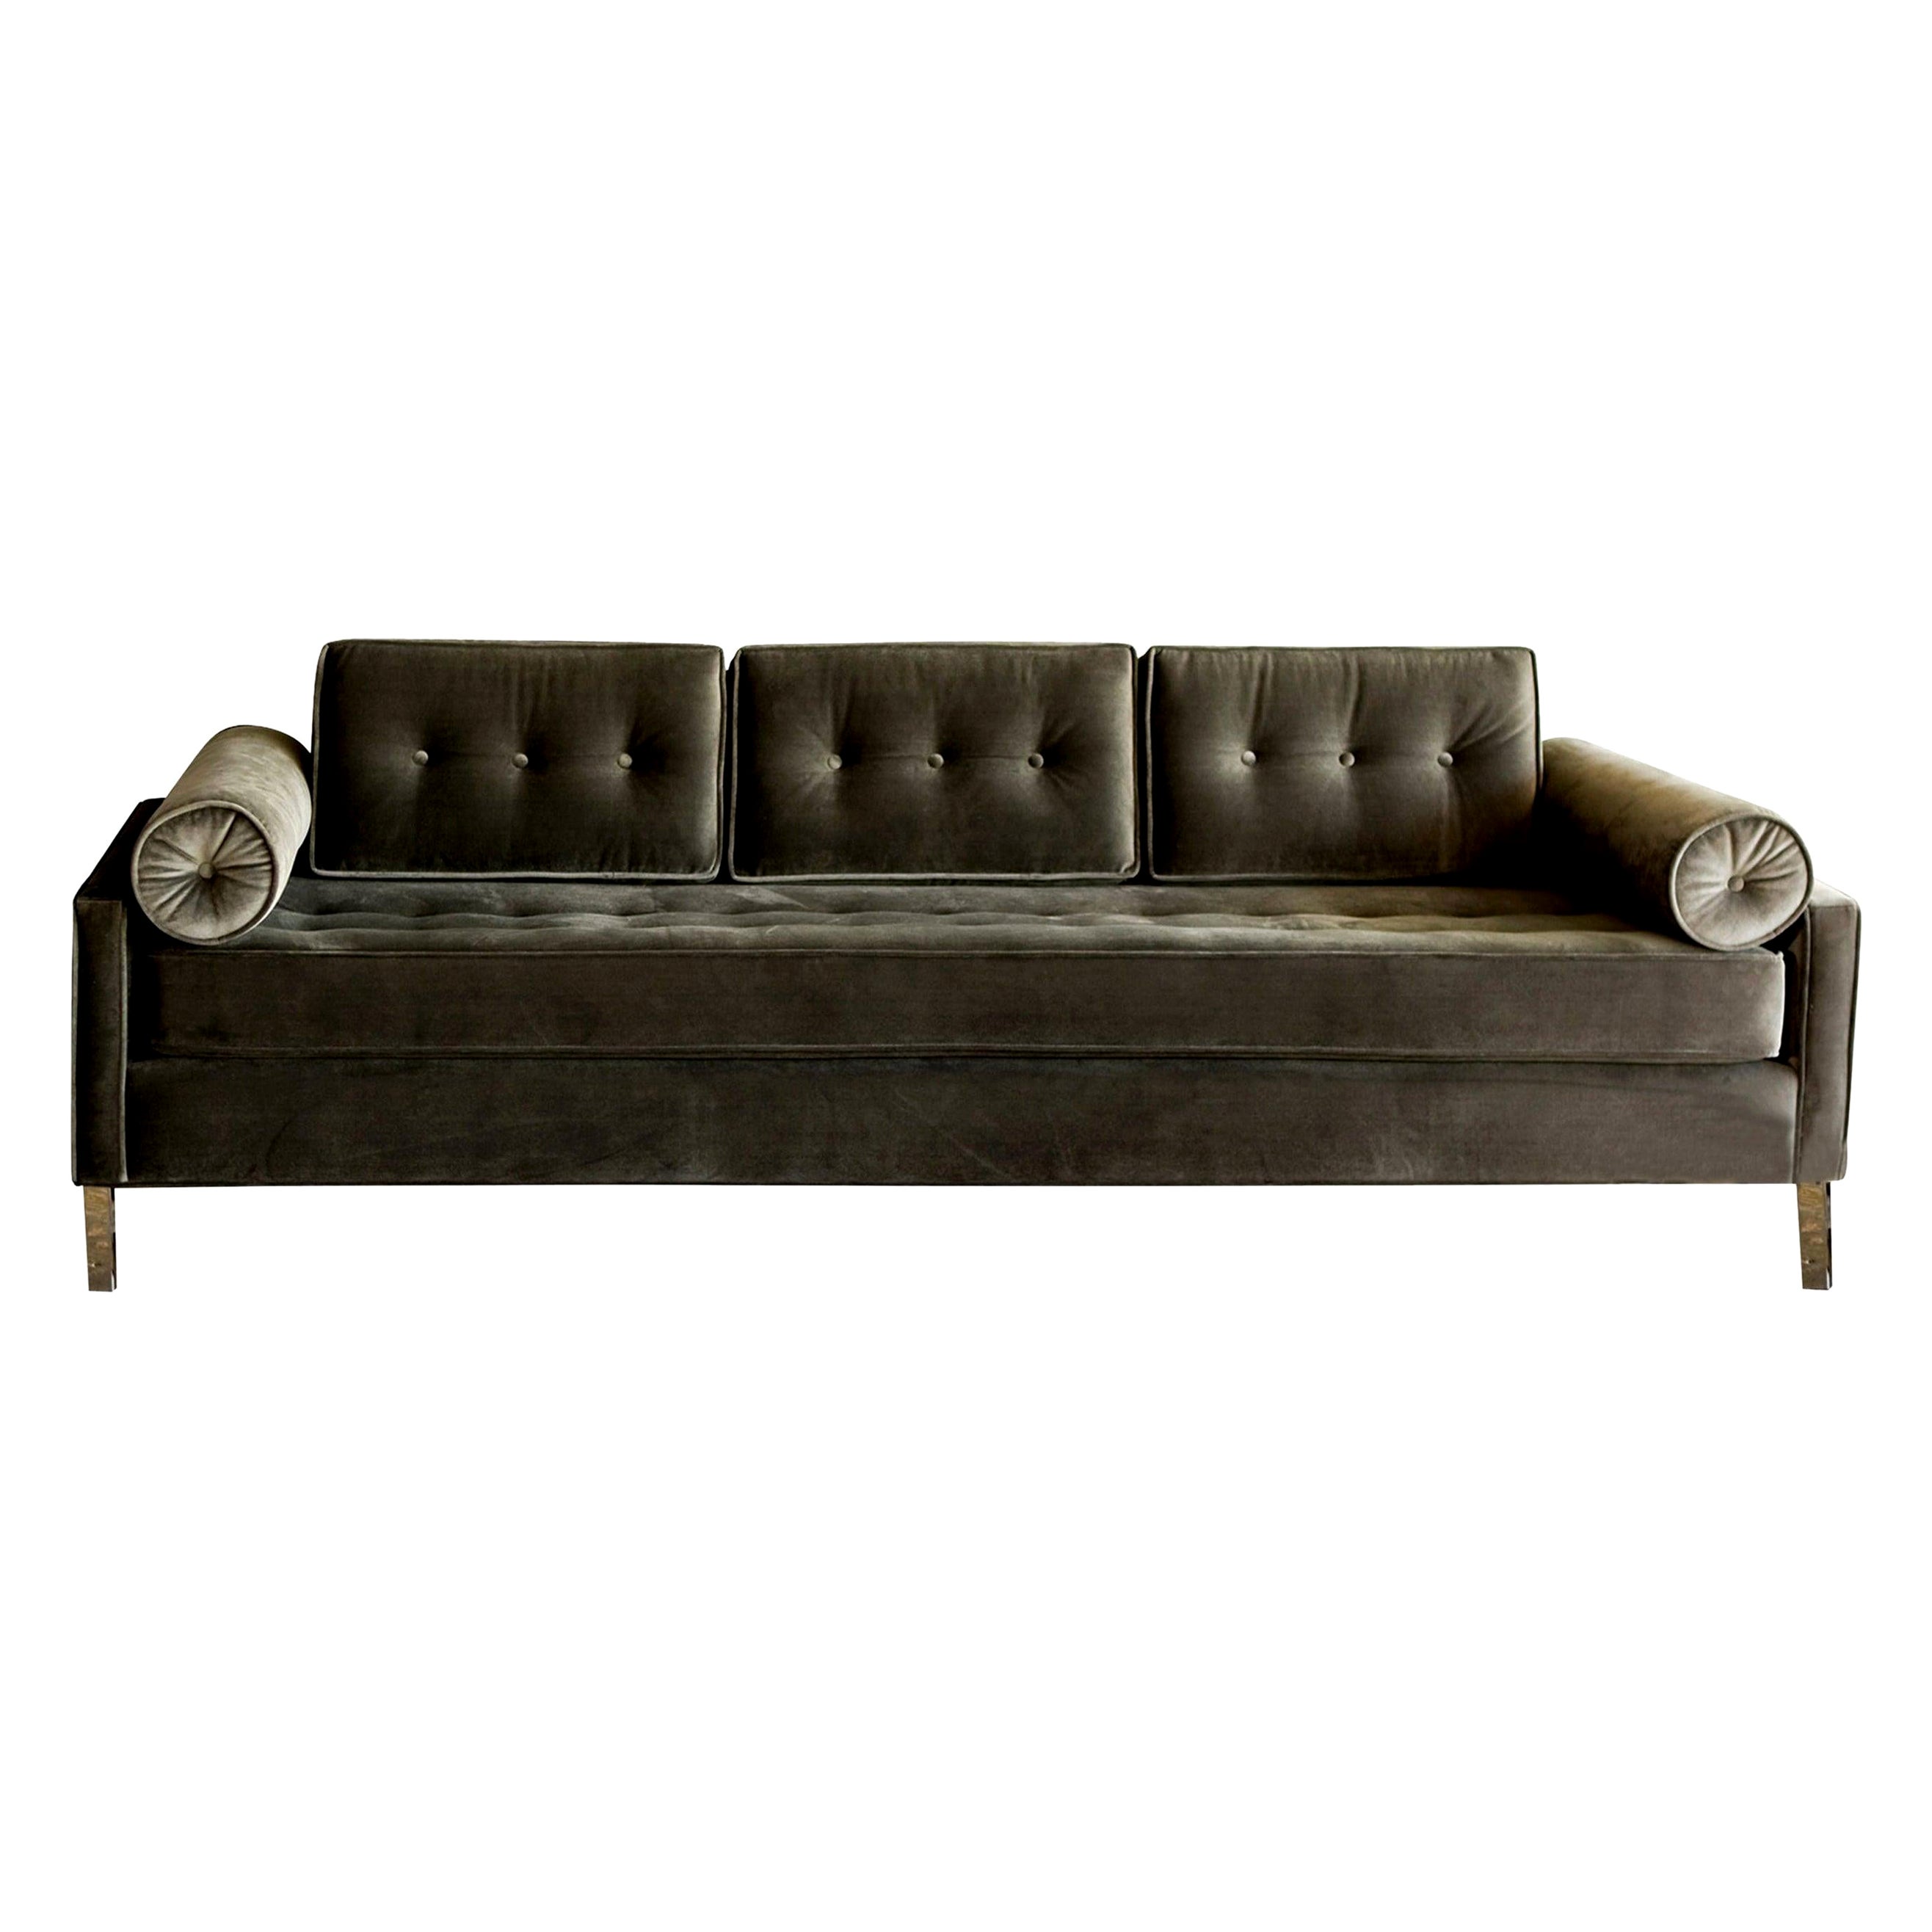 Case #1 Customizable Modern Sofa